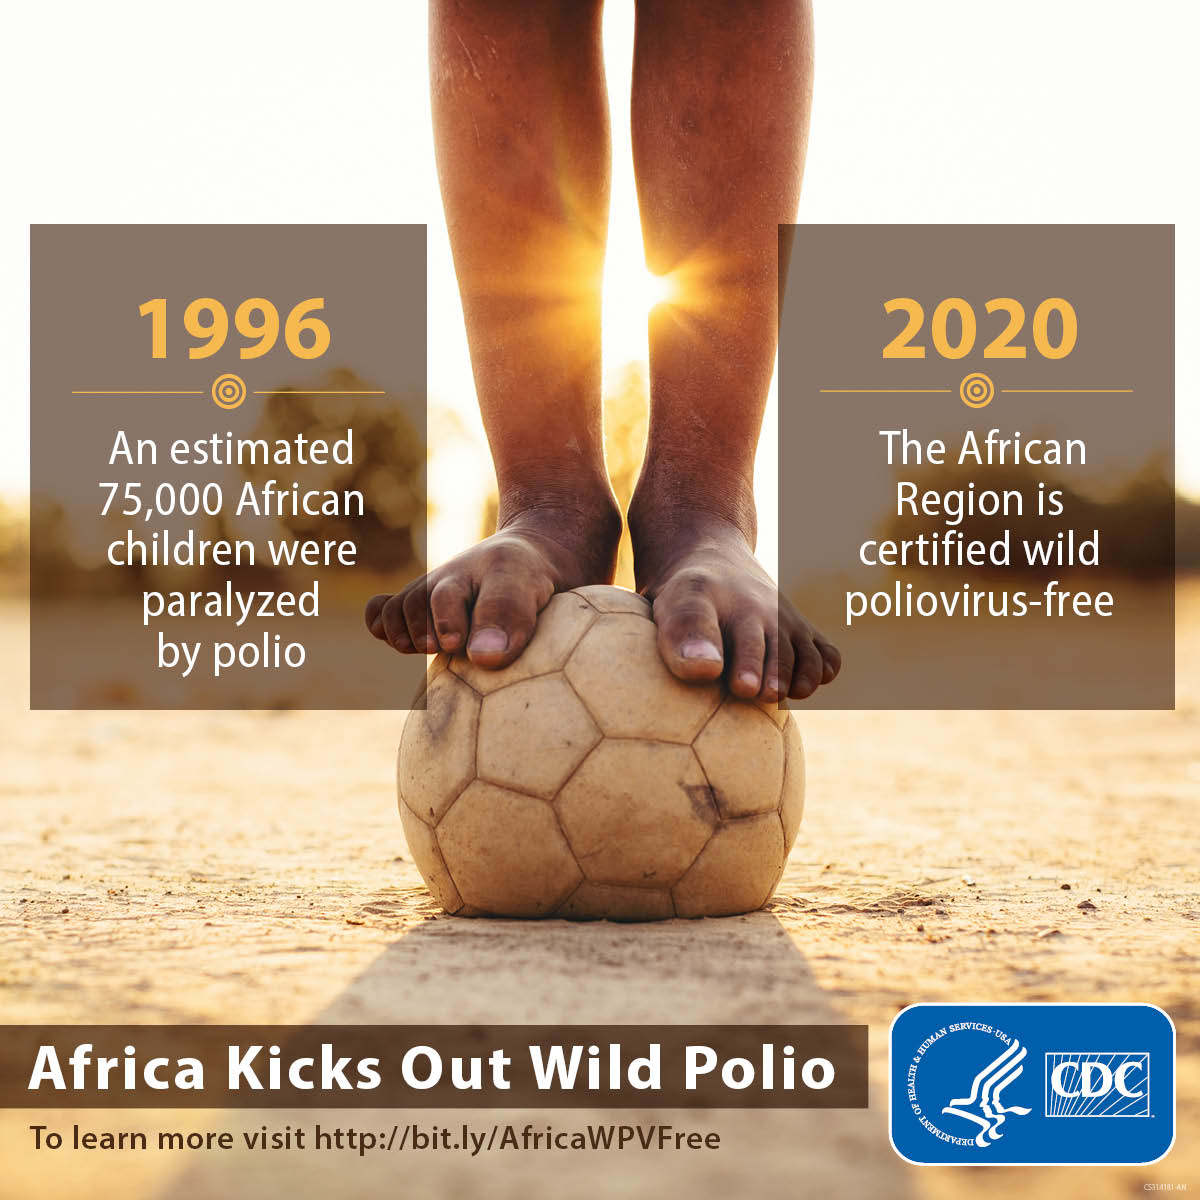 The African region is certified Wild-Polio-Virus-free